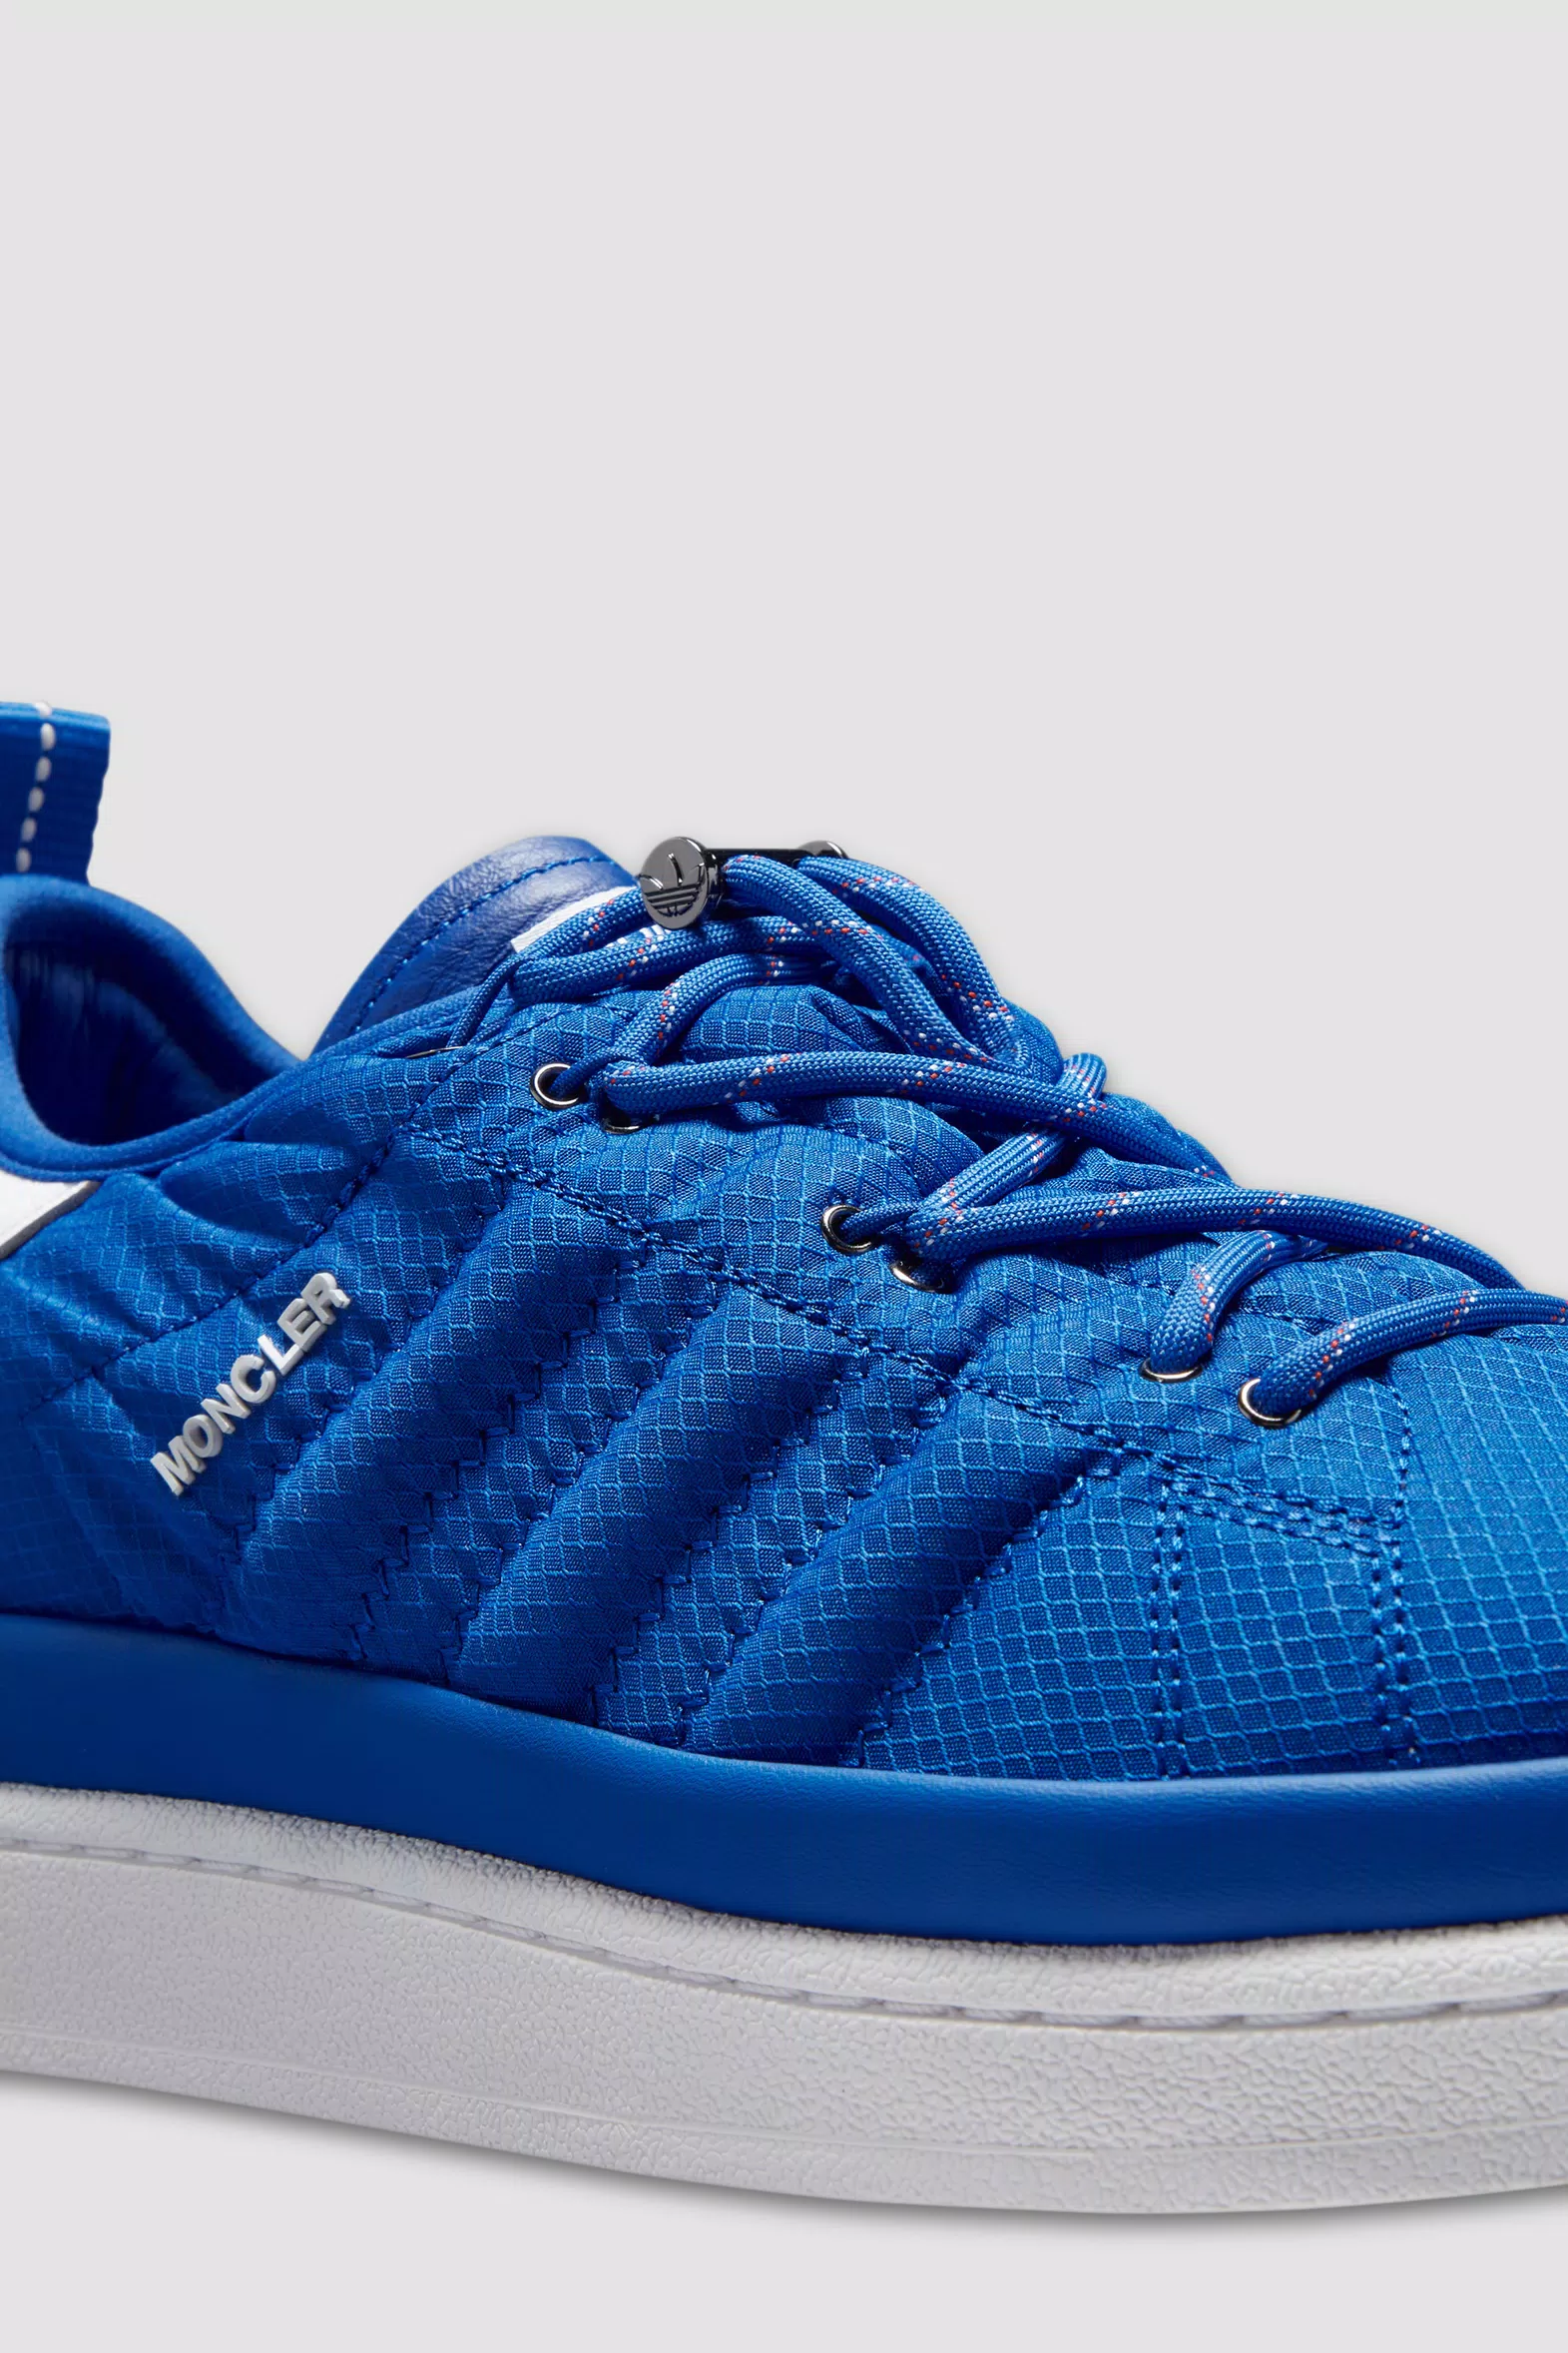 Blue Moncler Campus Trainers - Moncler x adidas Originals for Genius ...